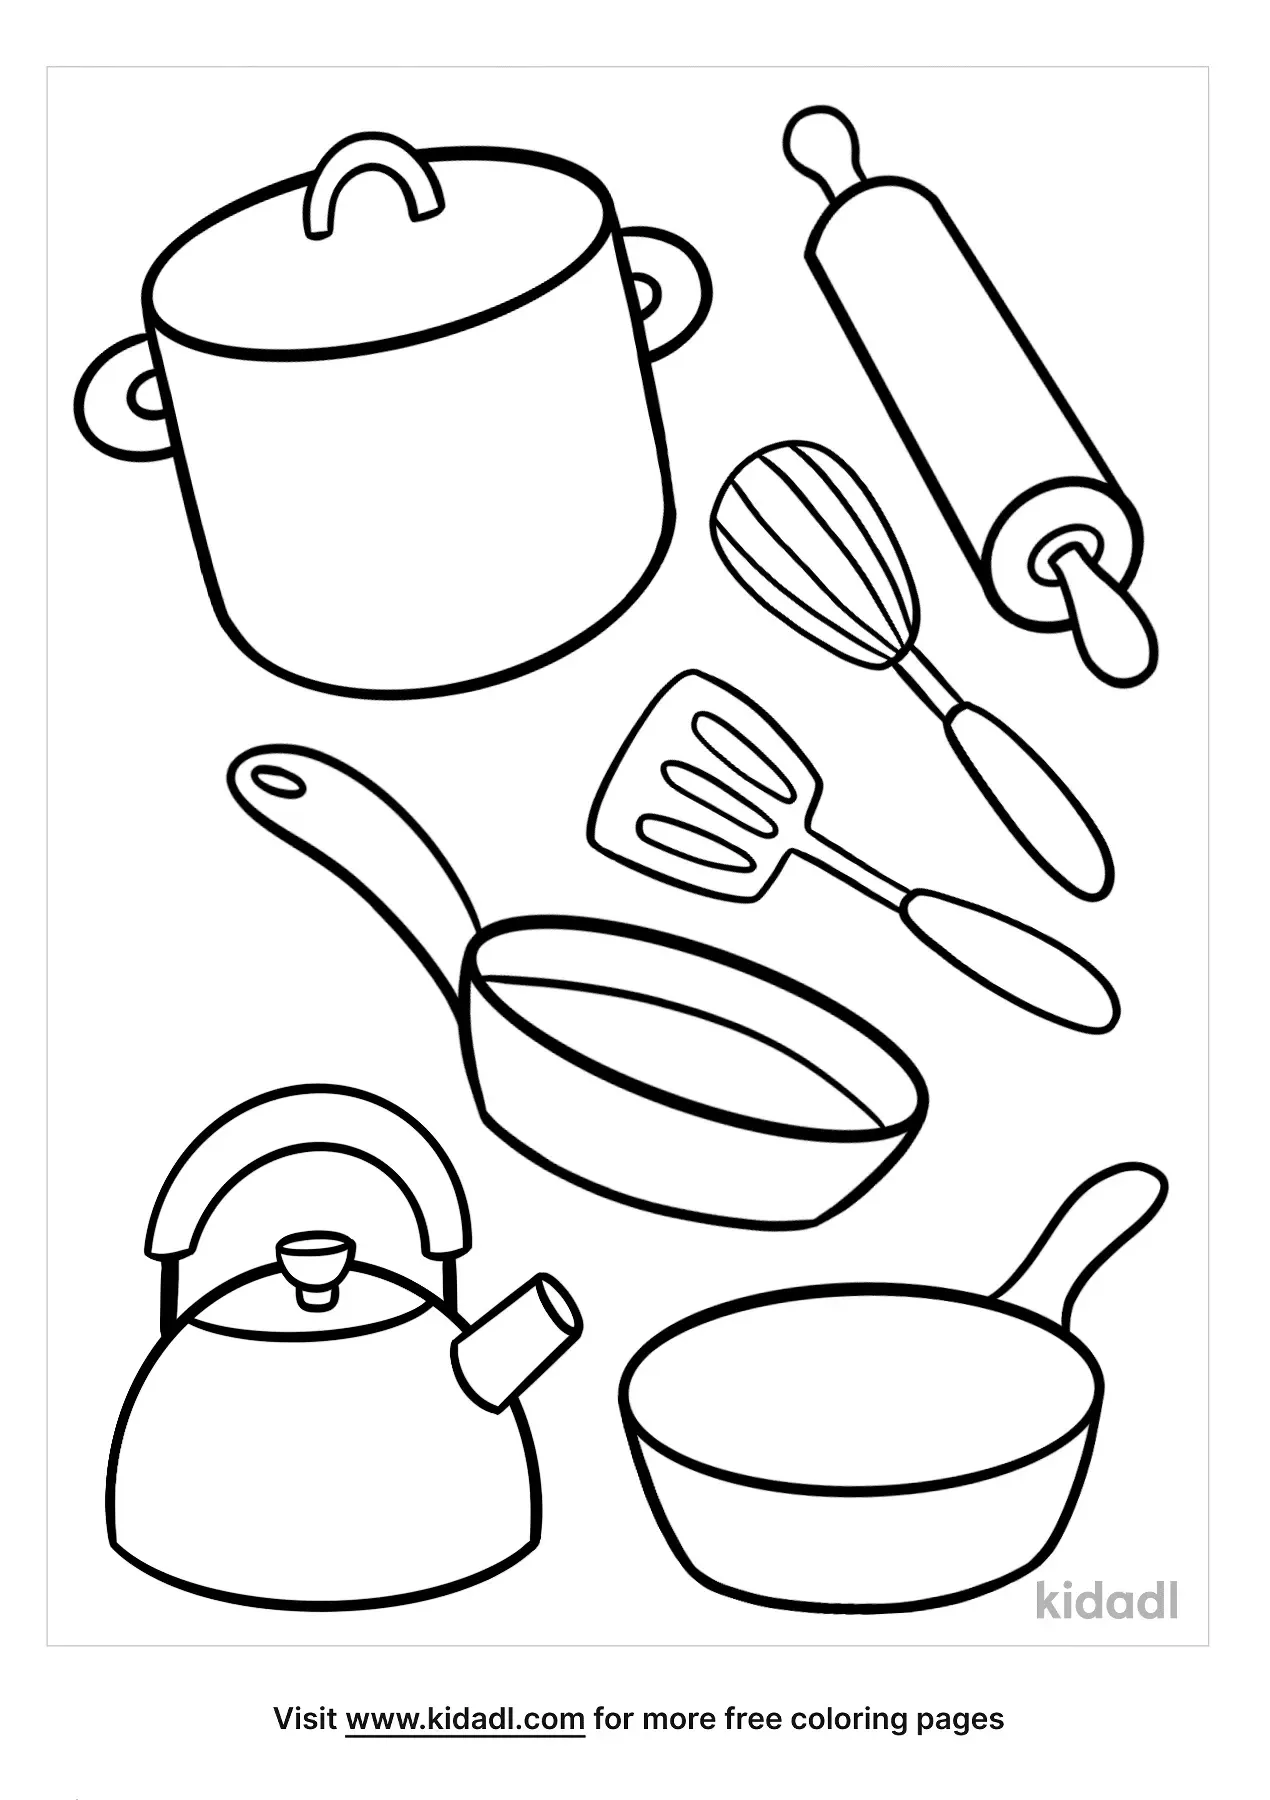 https://prod-media.kidadl.com/cooking-utensils-coloring-page-0.png